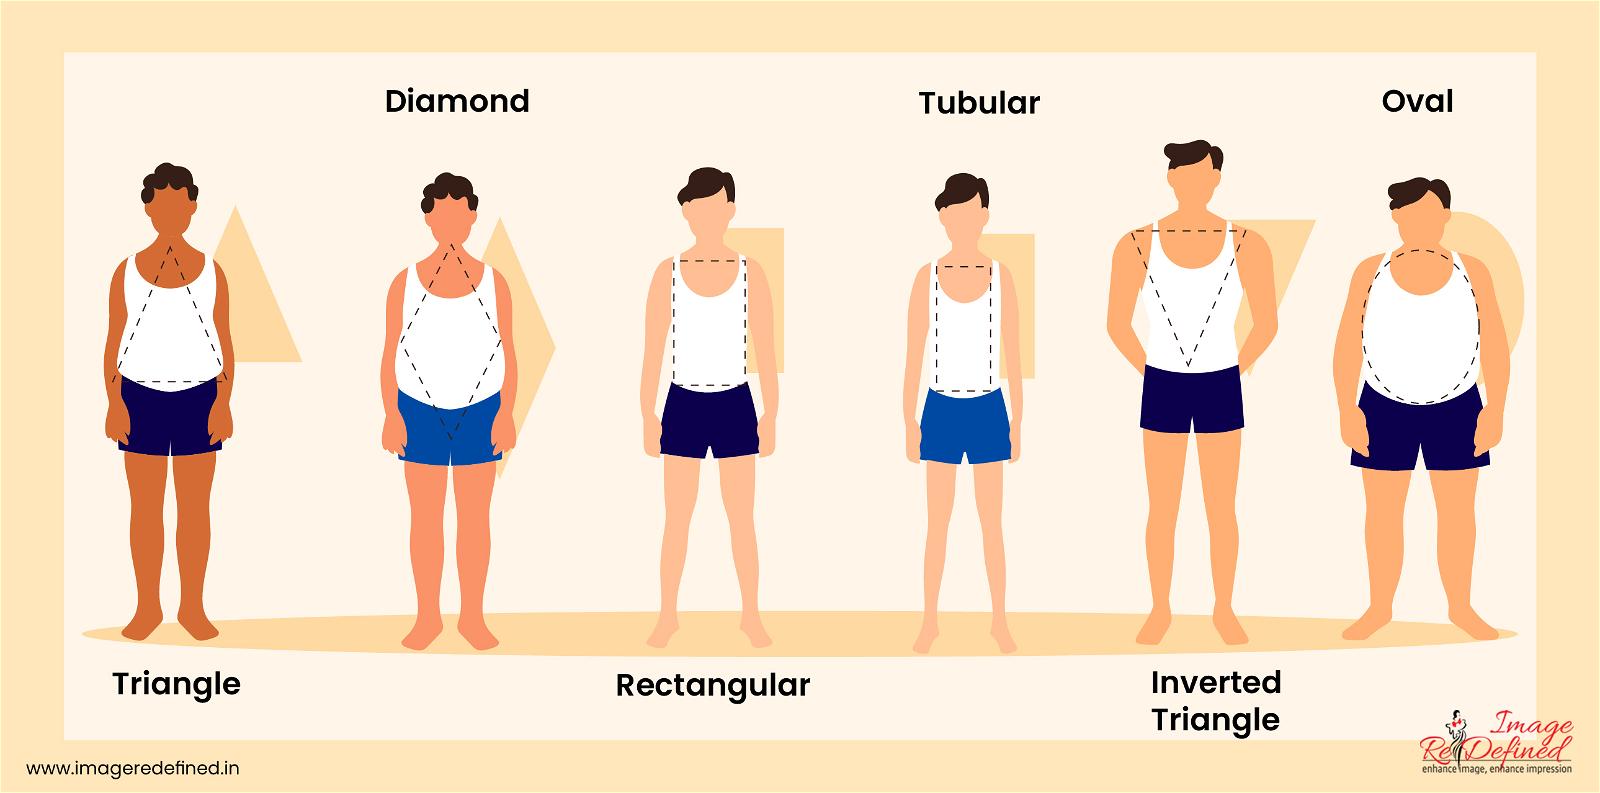 Men’s Body Shape Analysis to help Men dress better